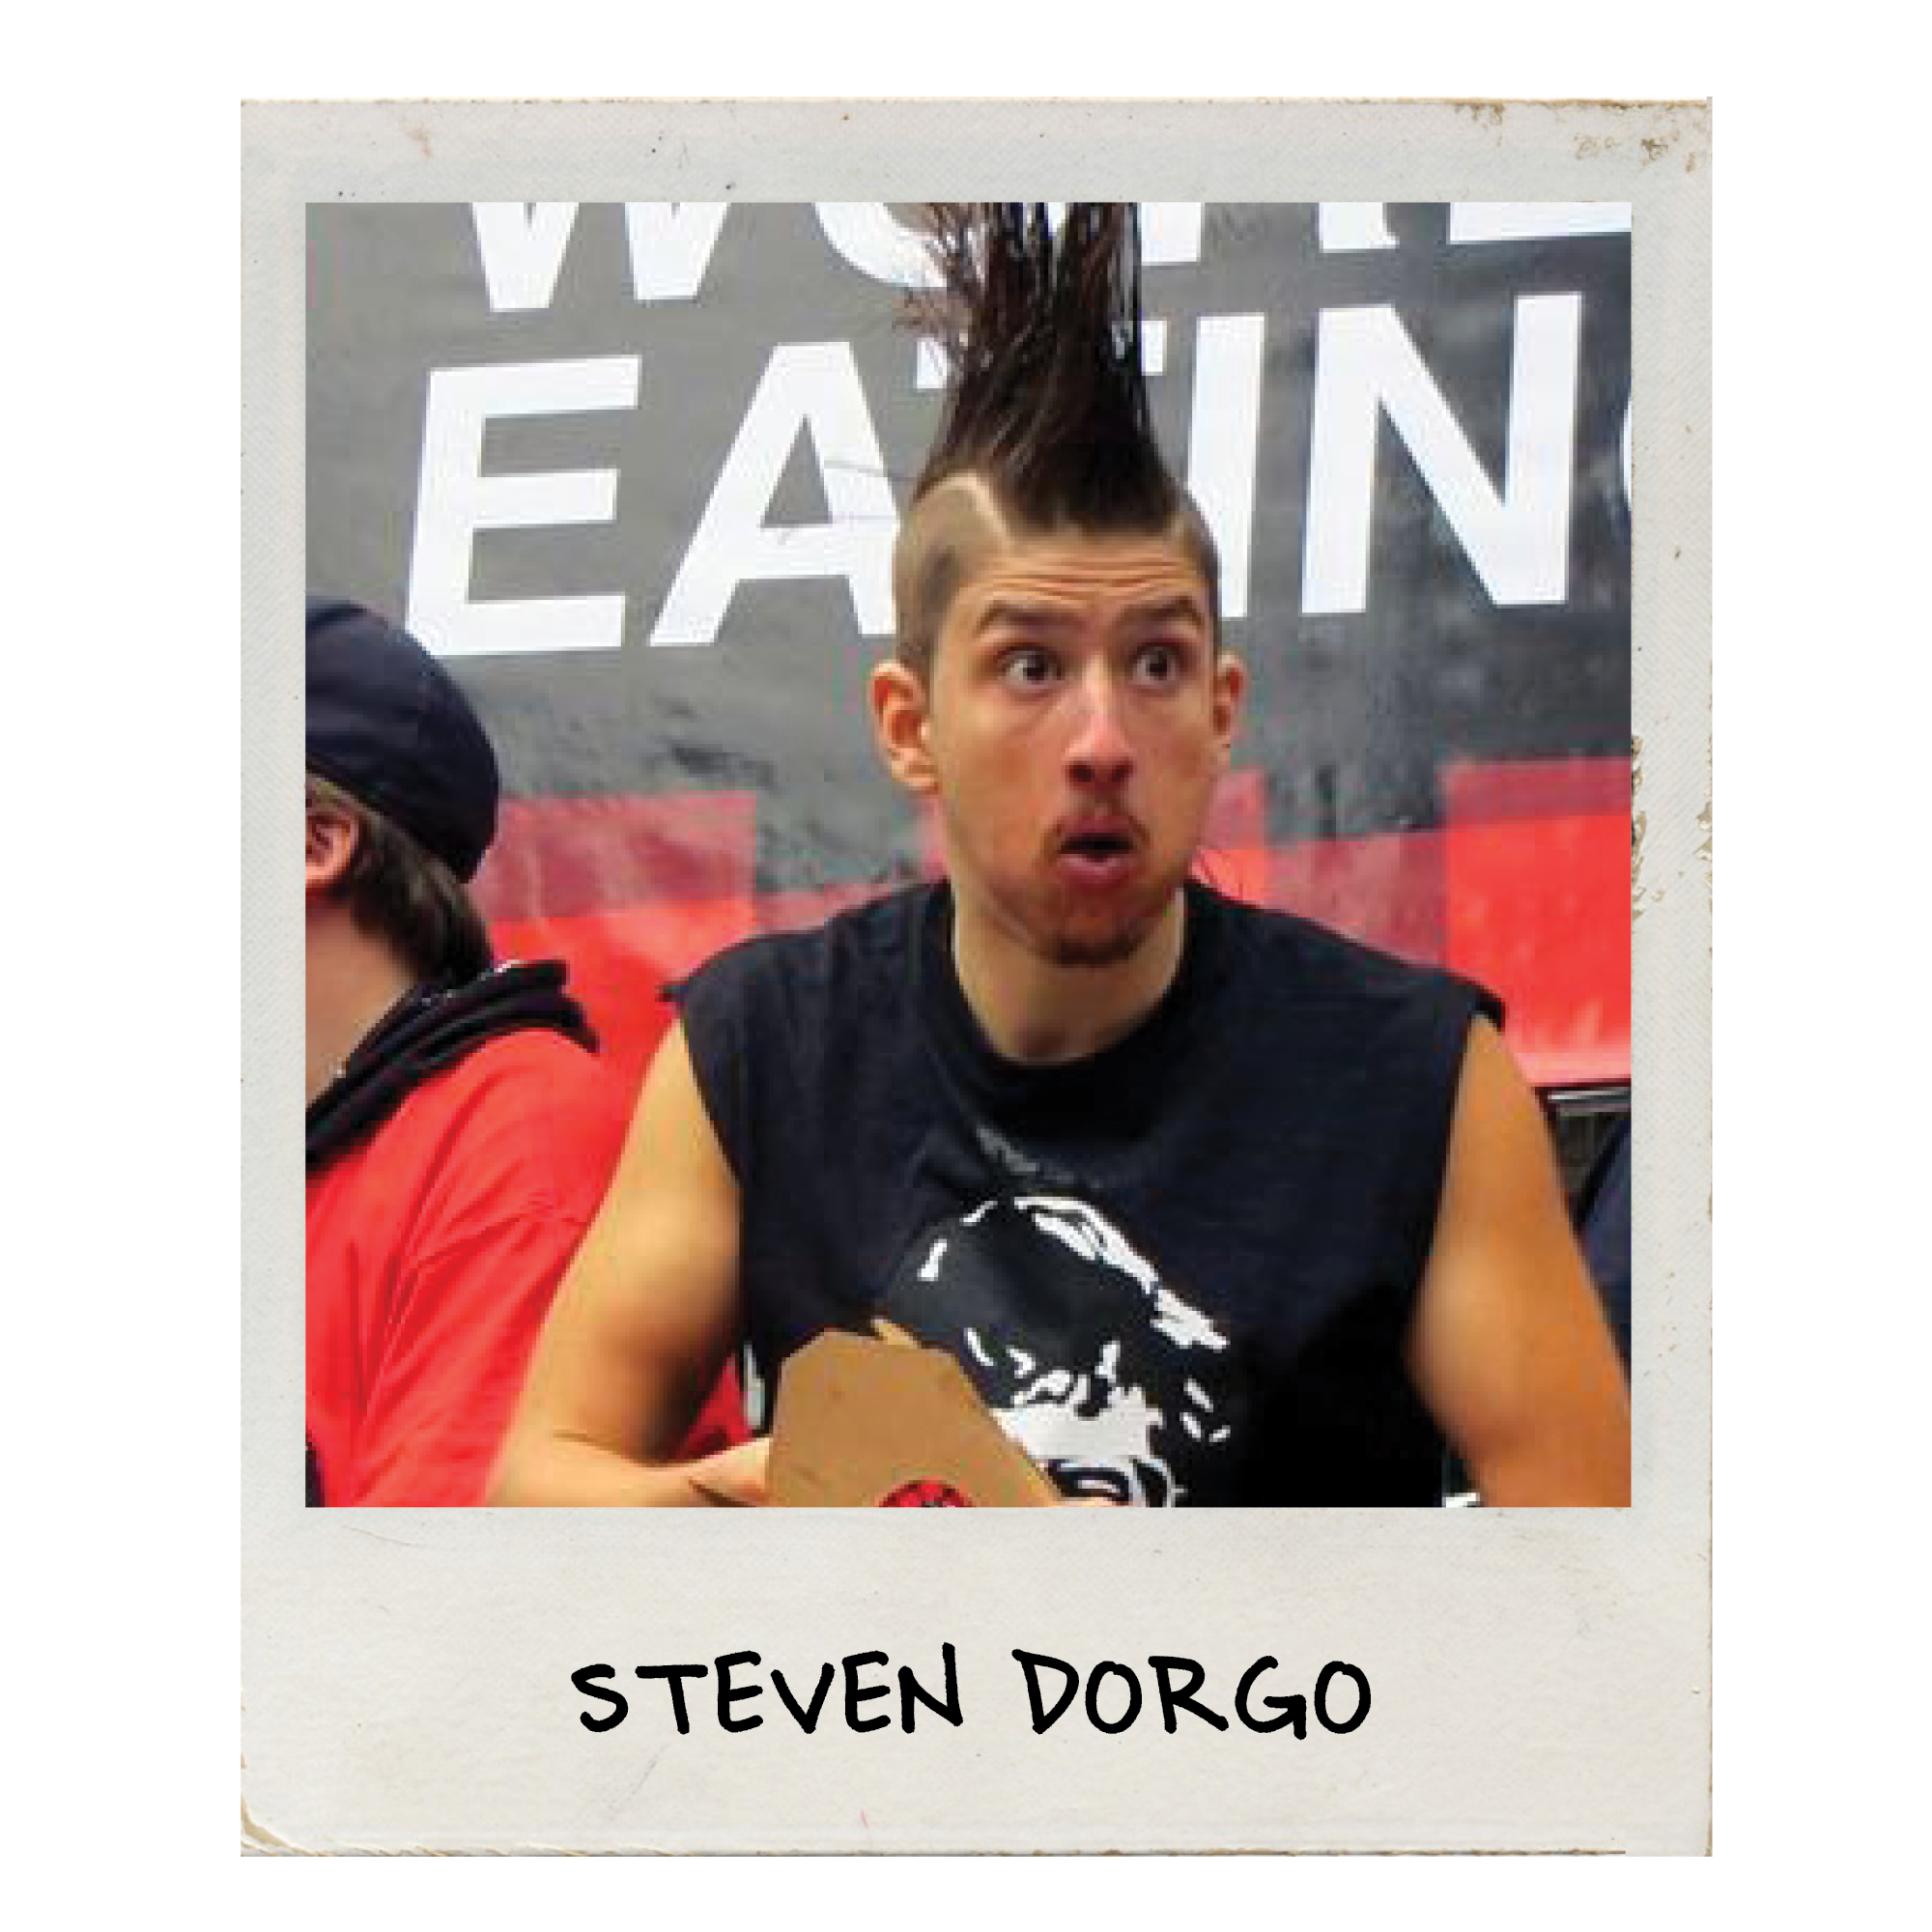 STEVEN DORGO - Polaroid